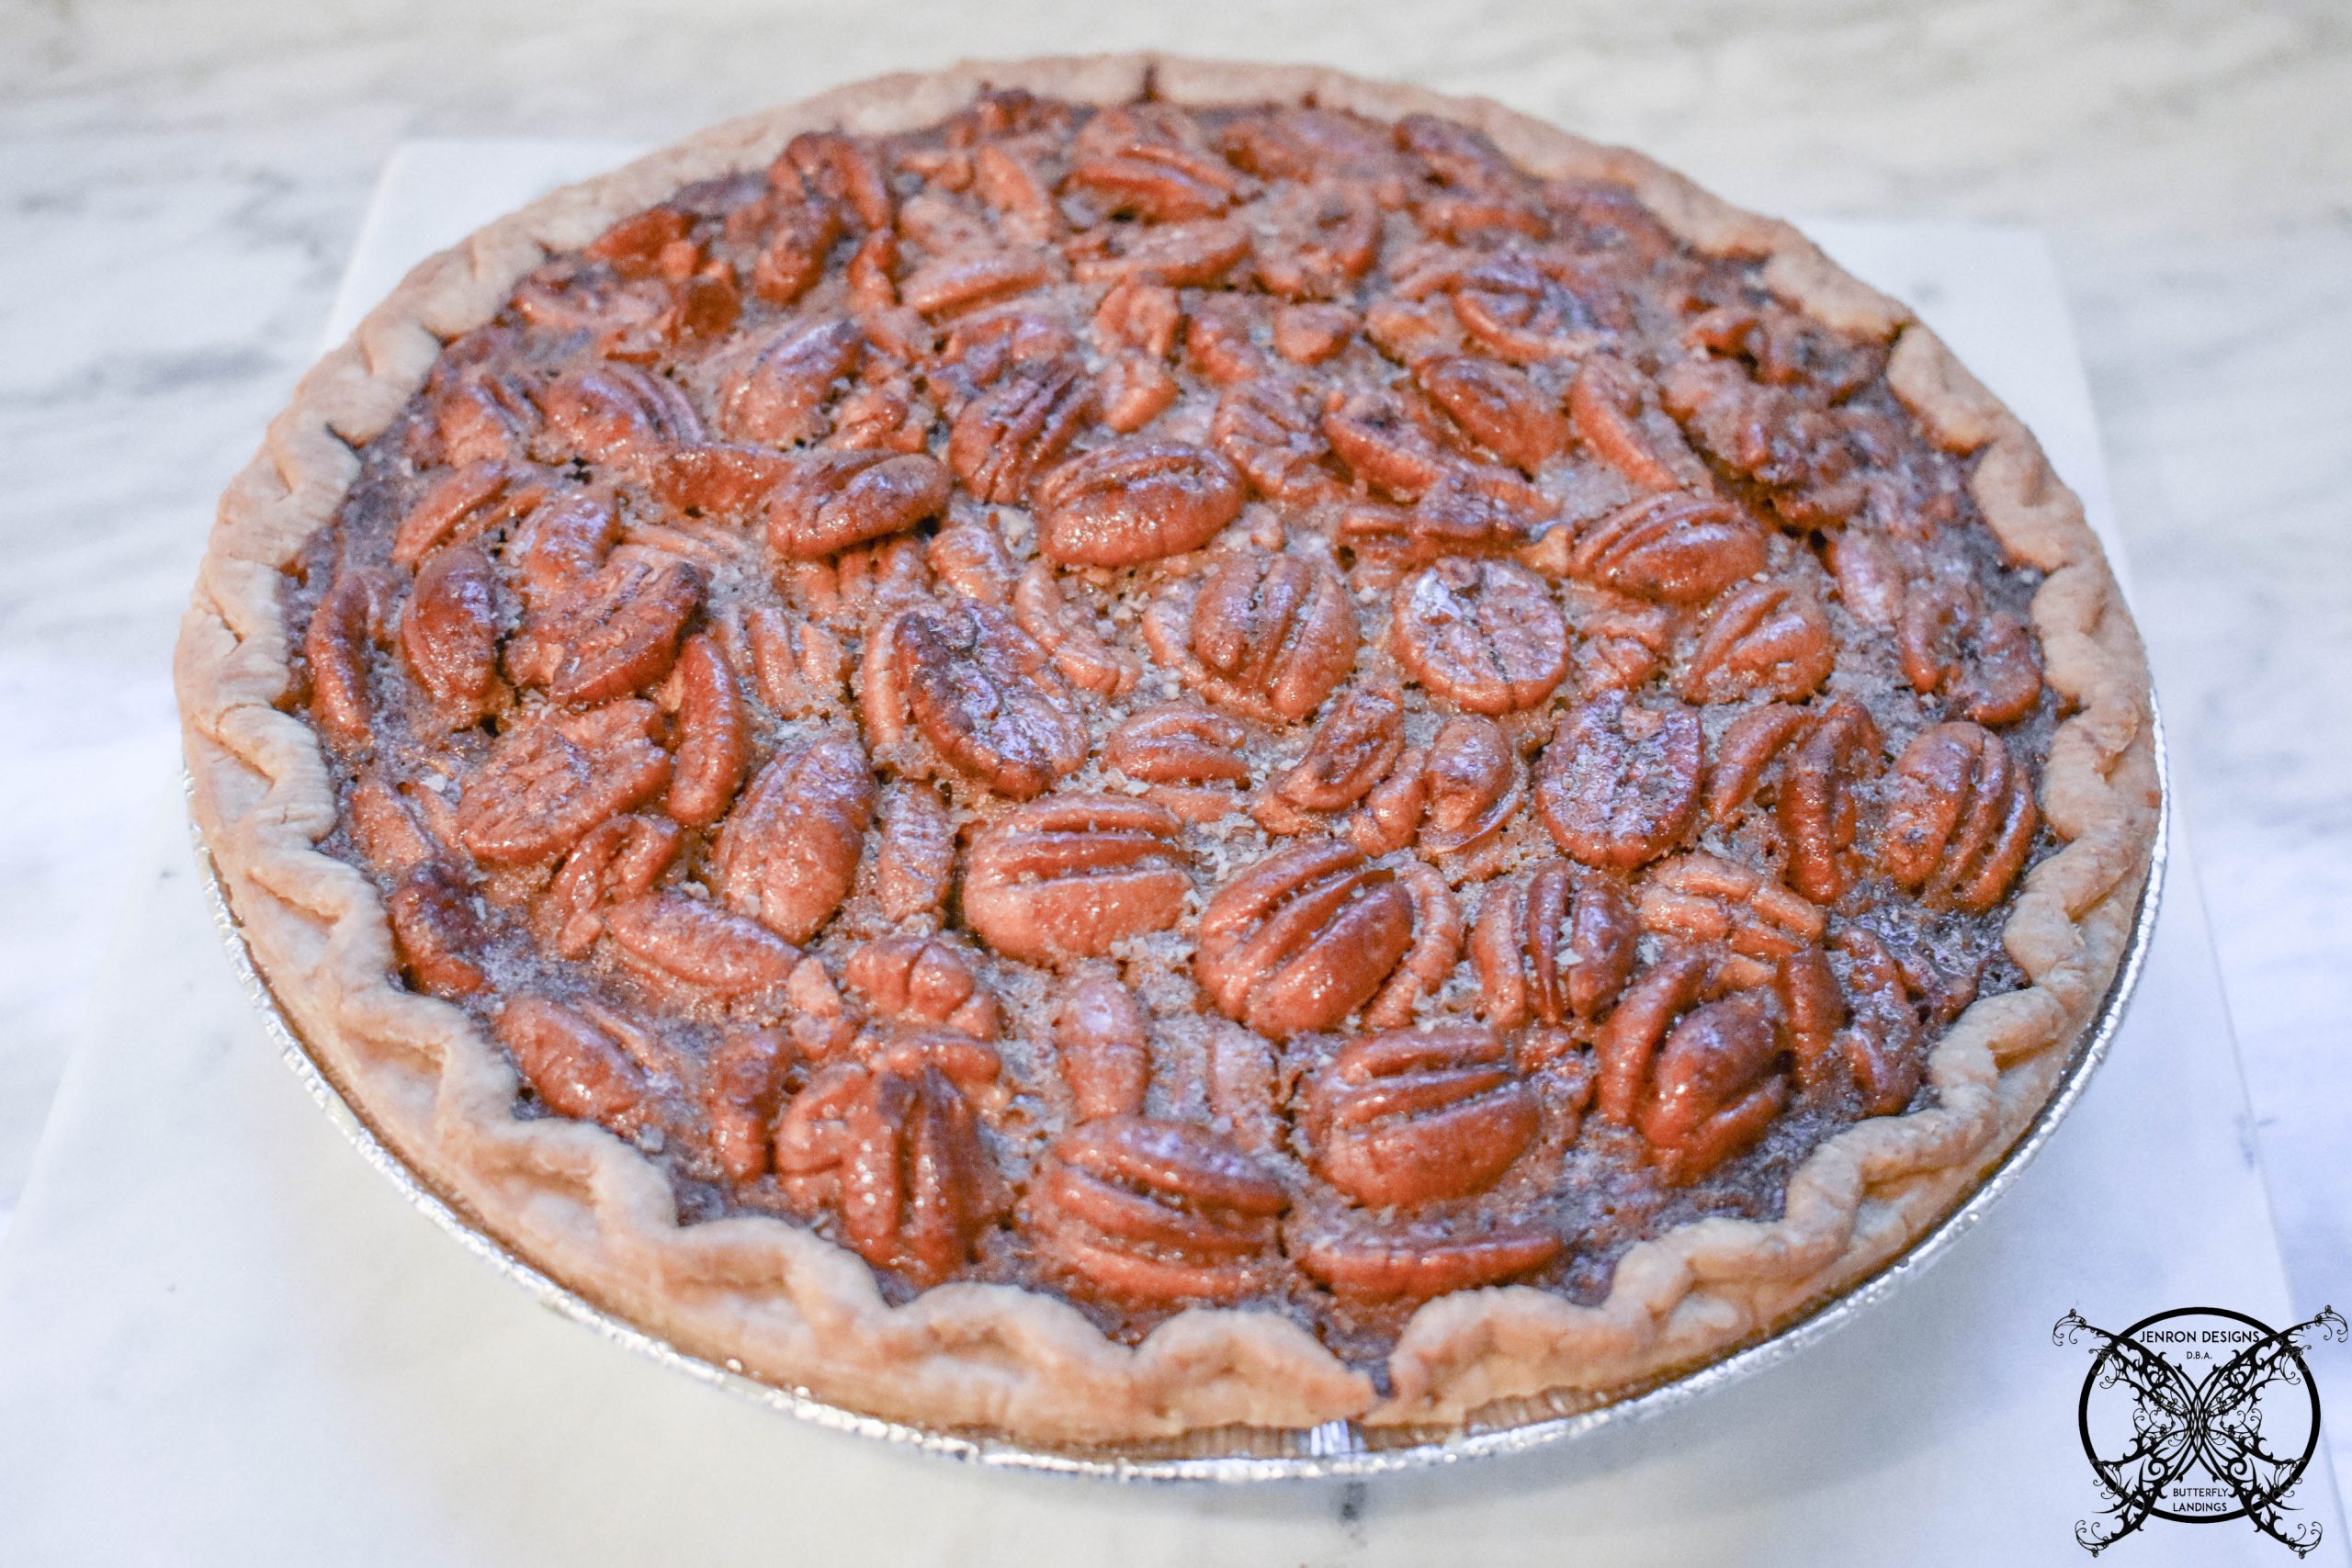 Maple Pecan Pie with Applewood Sea Salt JENRON DESIGNS